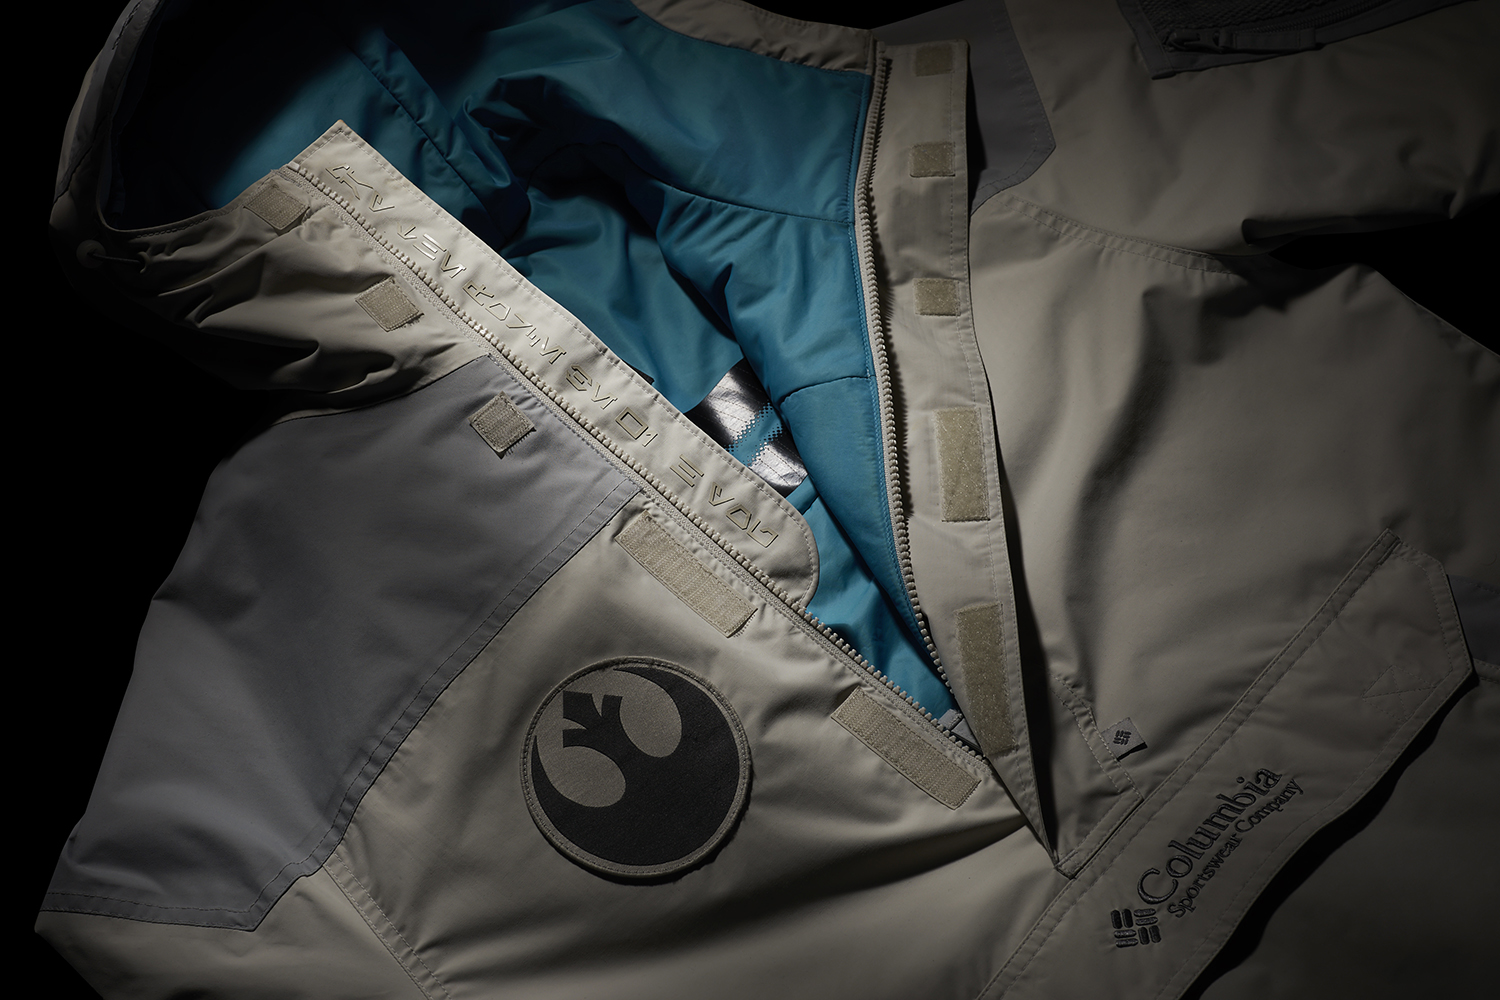 Star Wars Columbia Sportswear 2019